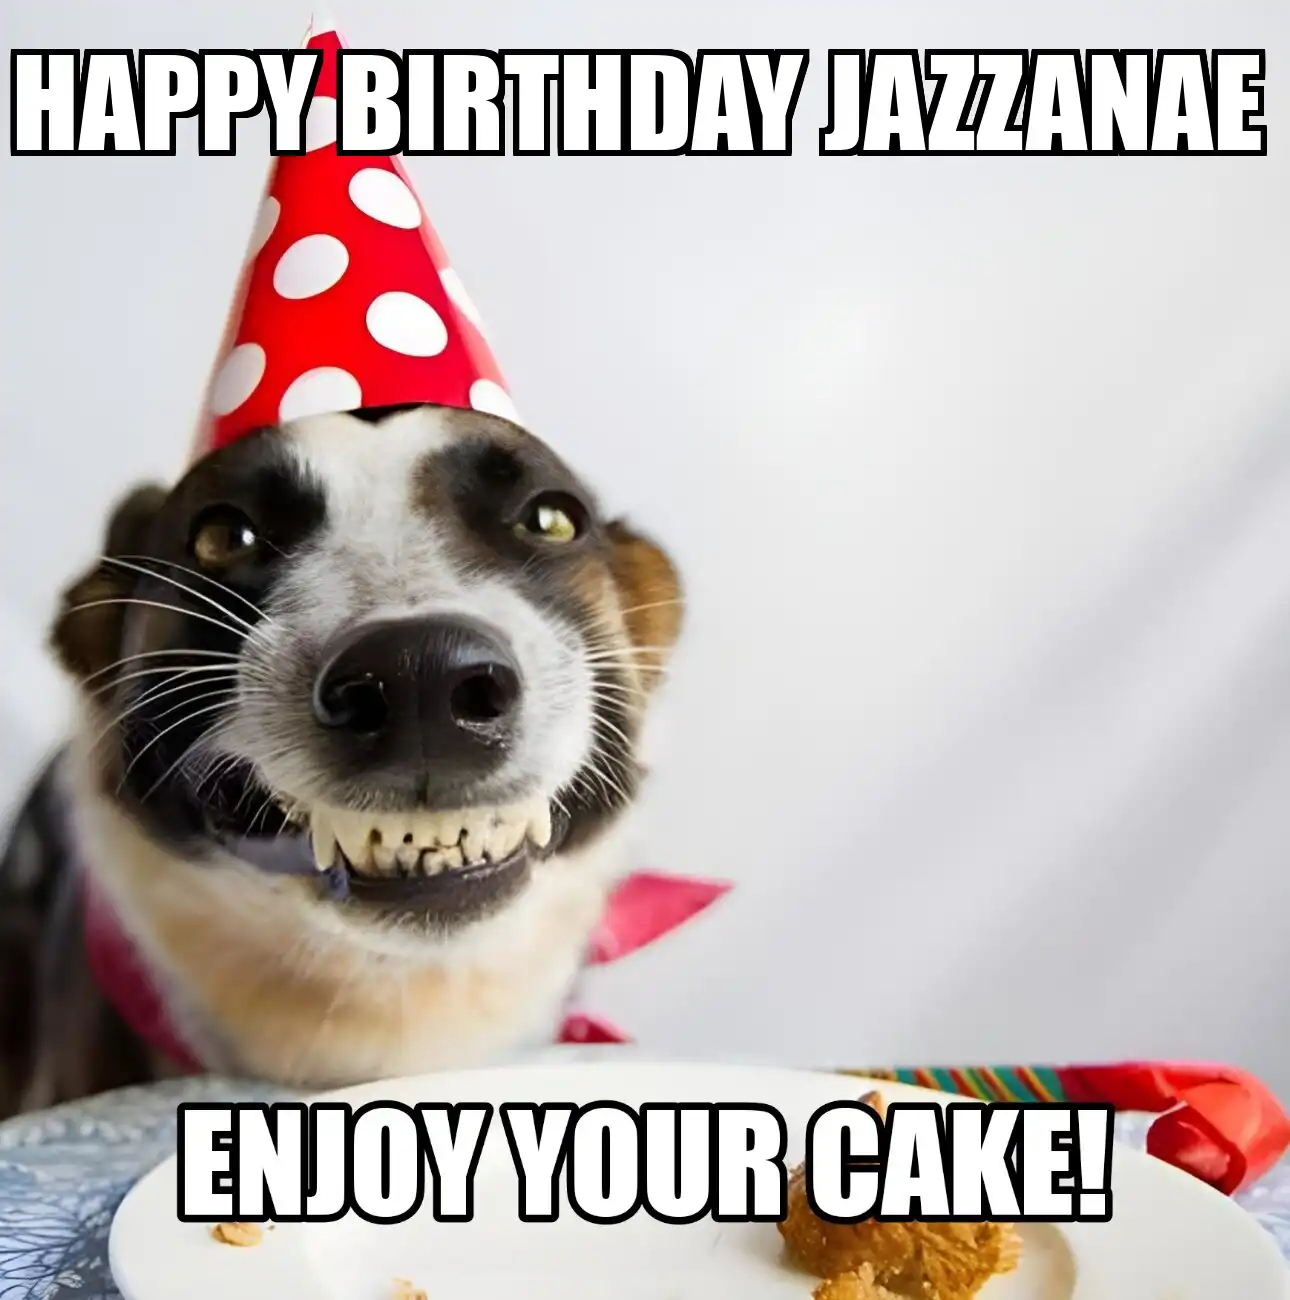 Happy Birthday Jazzanae Enjoy Your Cake Dog Meme